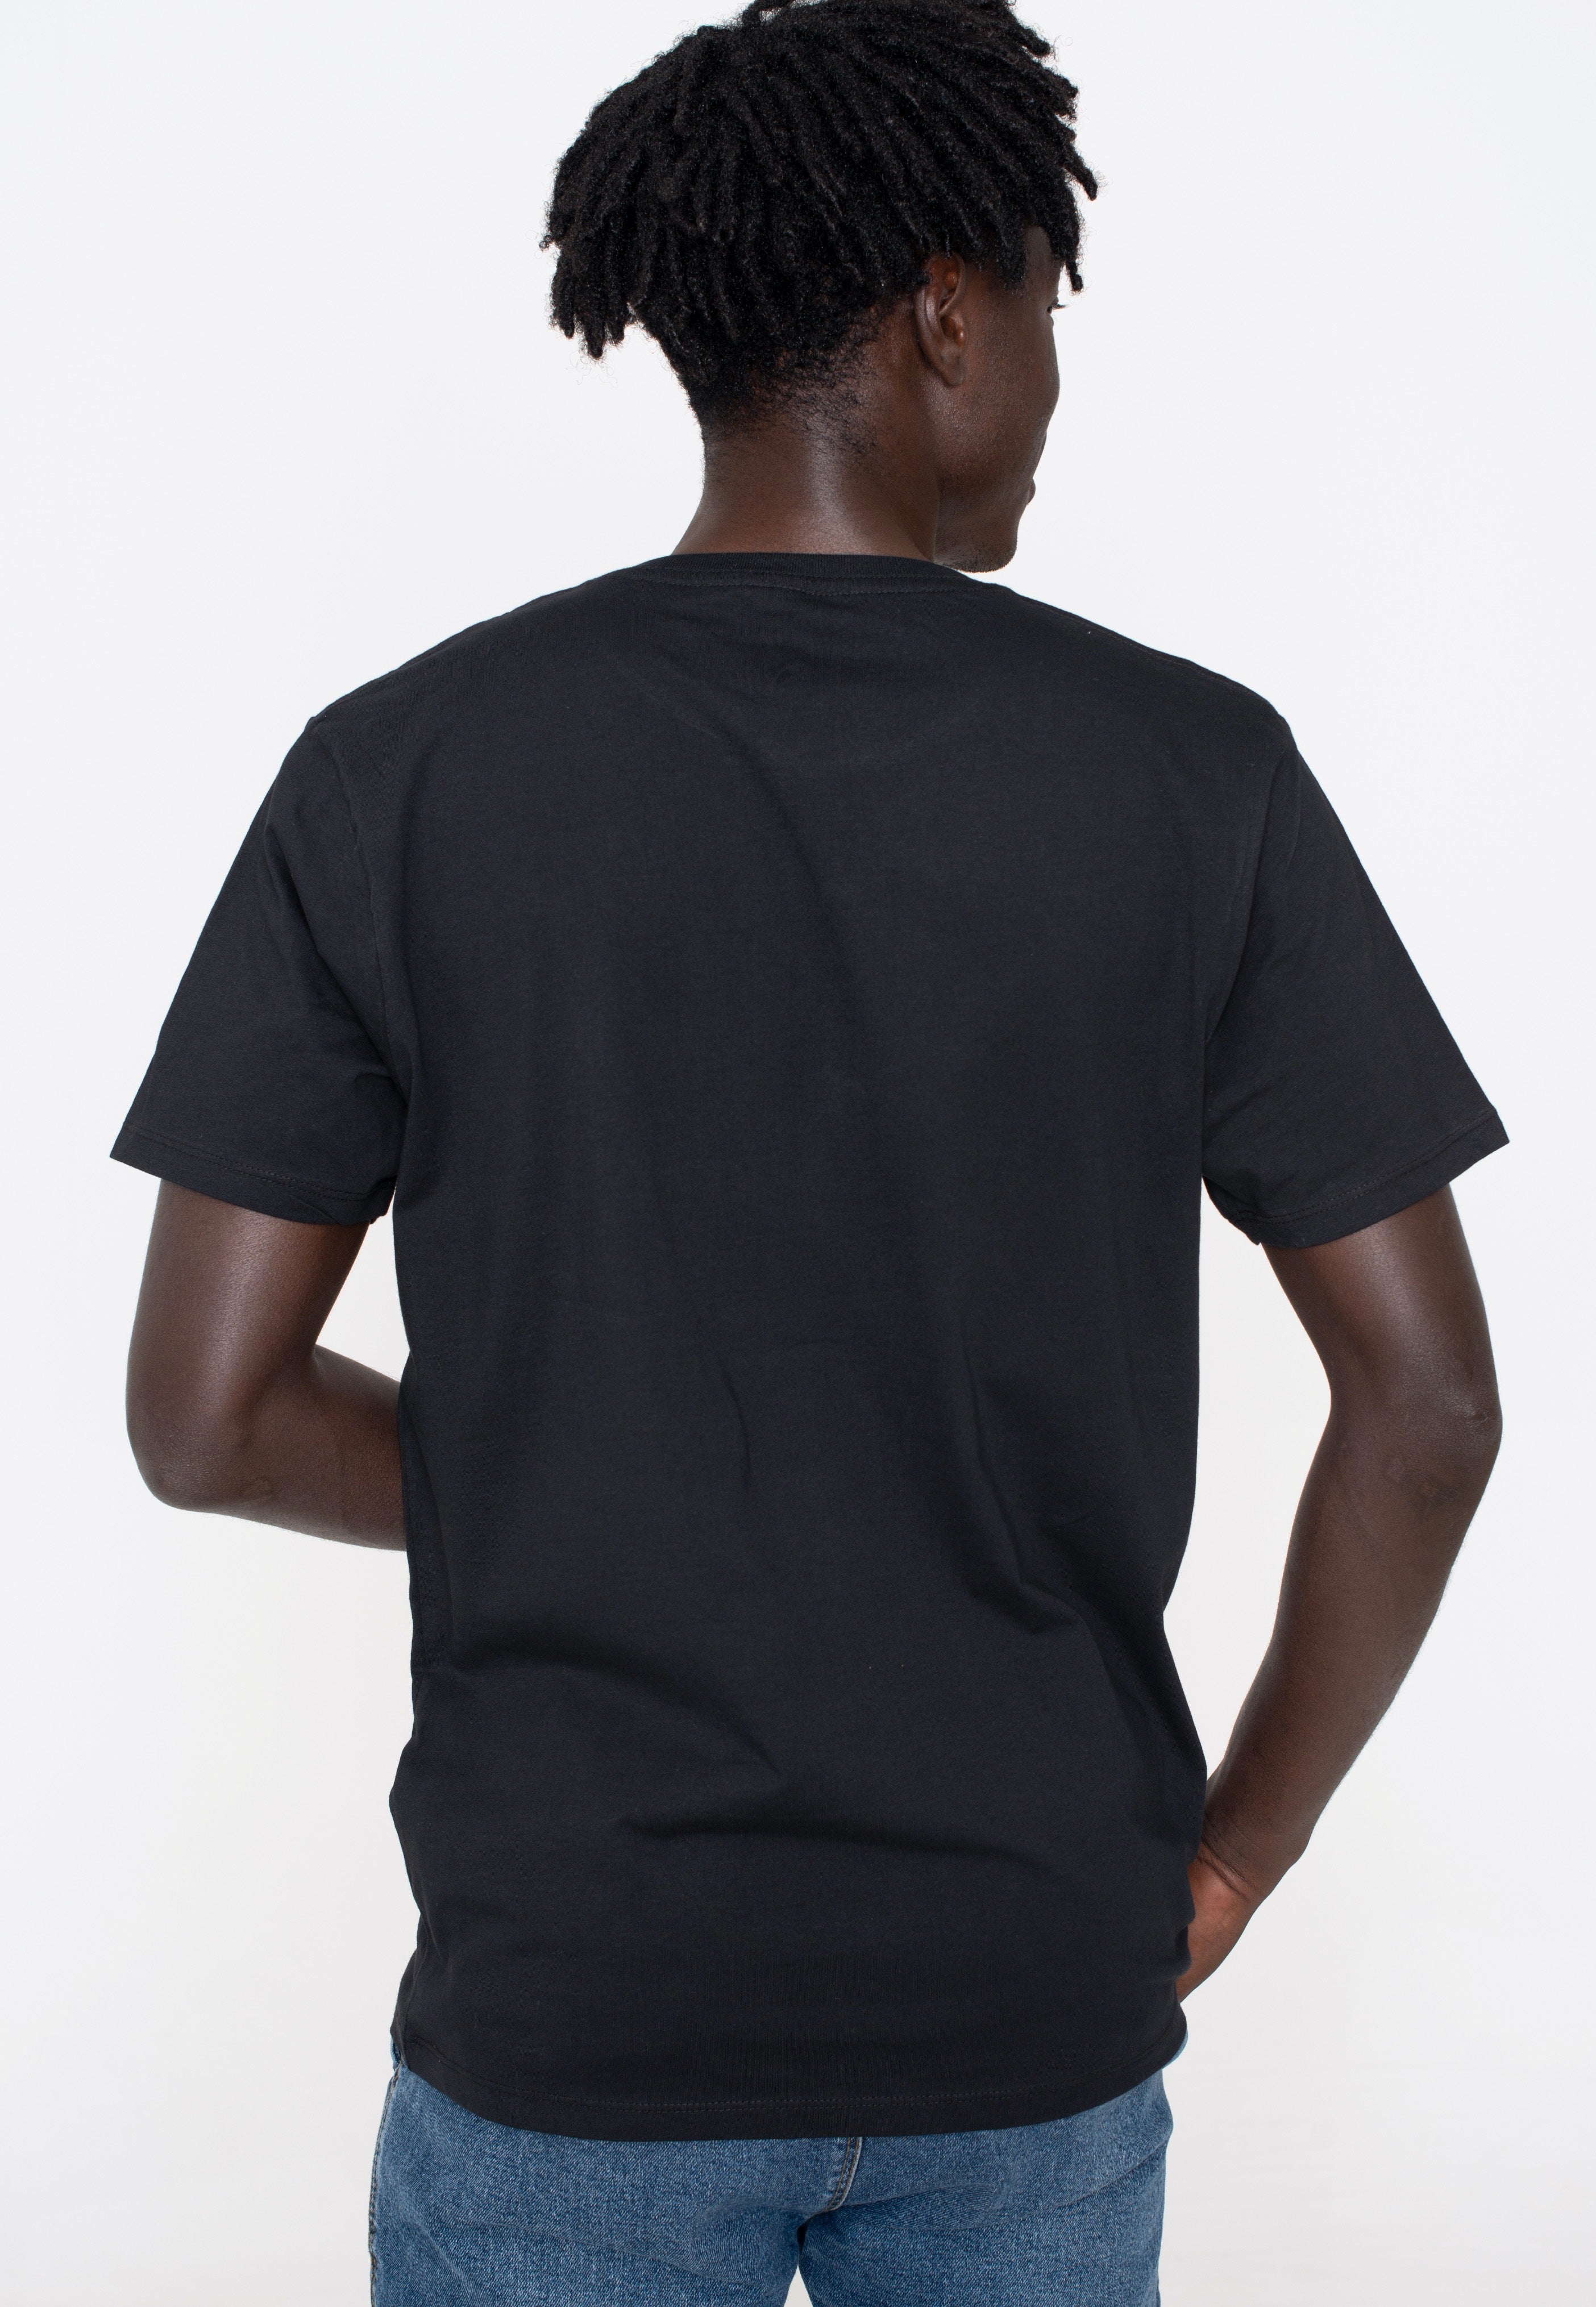 Callejon - Eternia - T-Shirt | Men-Image